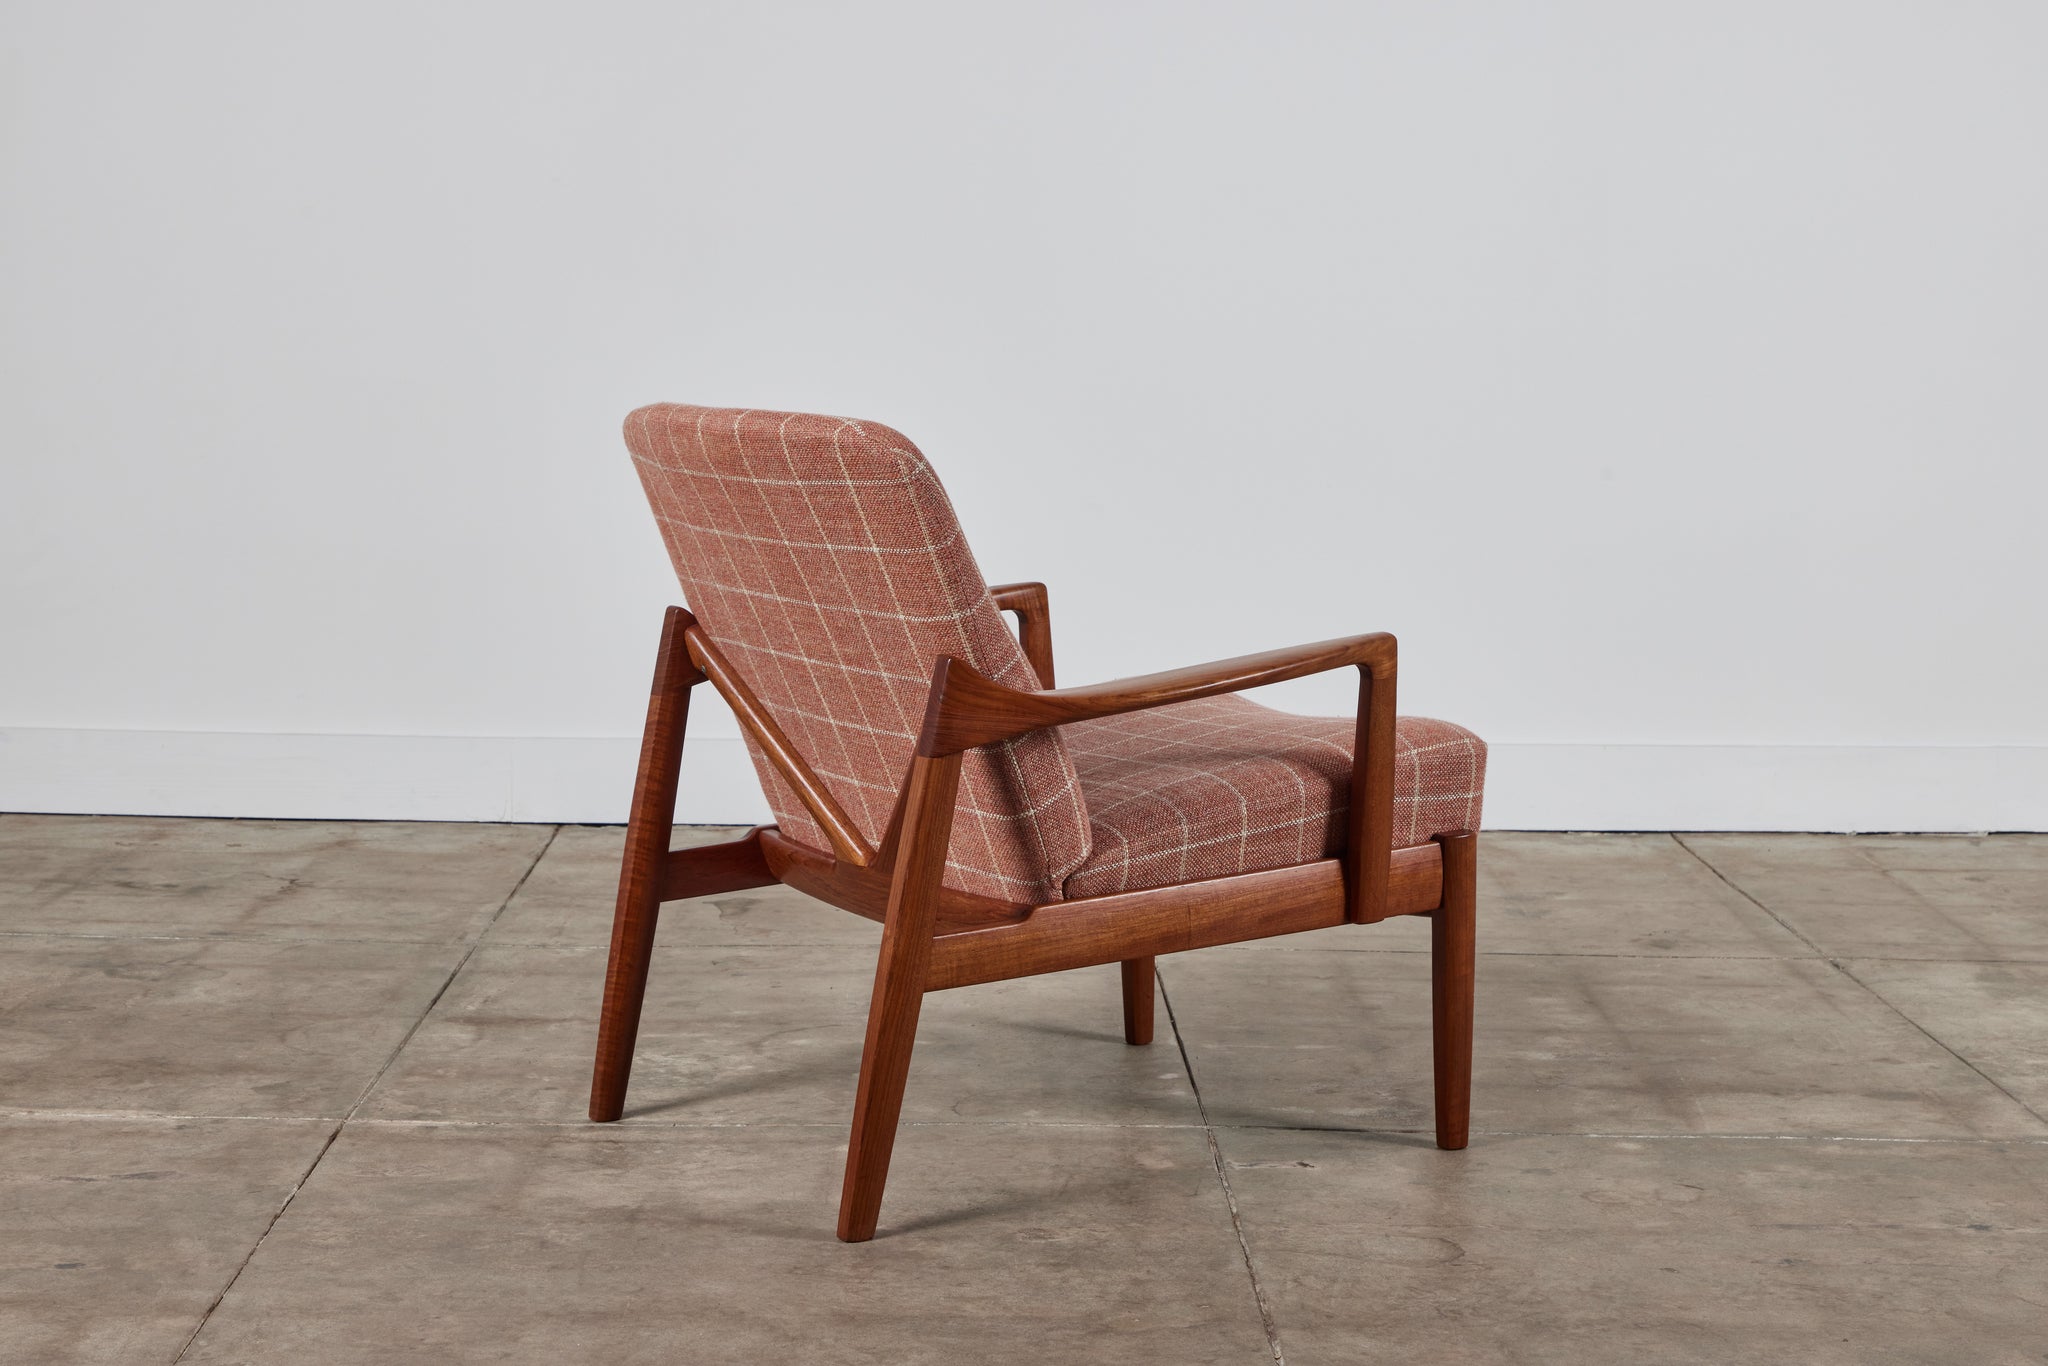 Tove & Edvard Kindt-Larsen "Model 125" Lounge Chair for France & Son